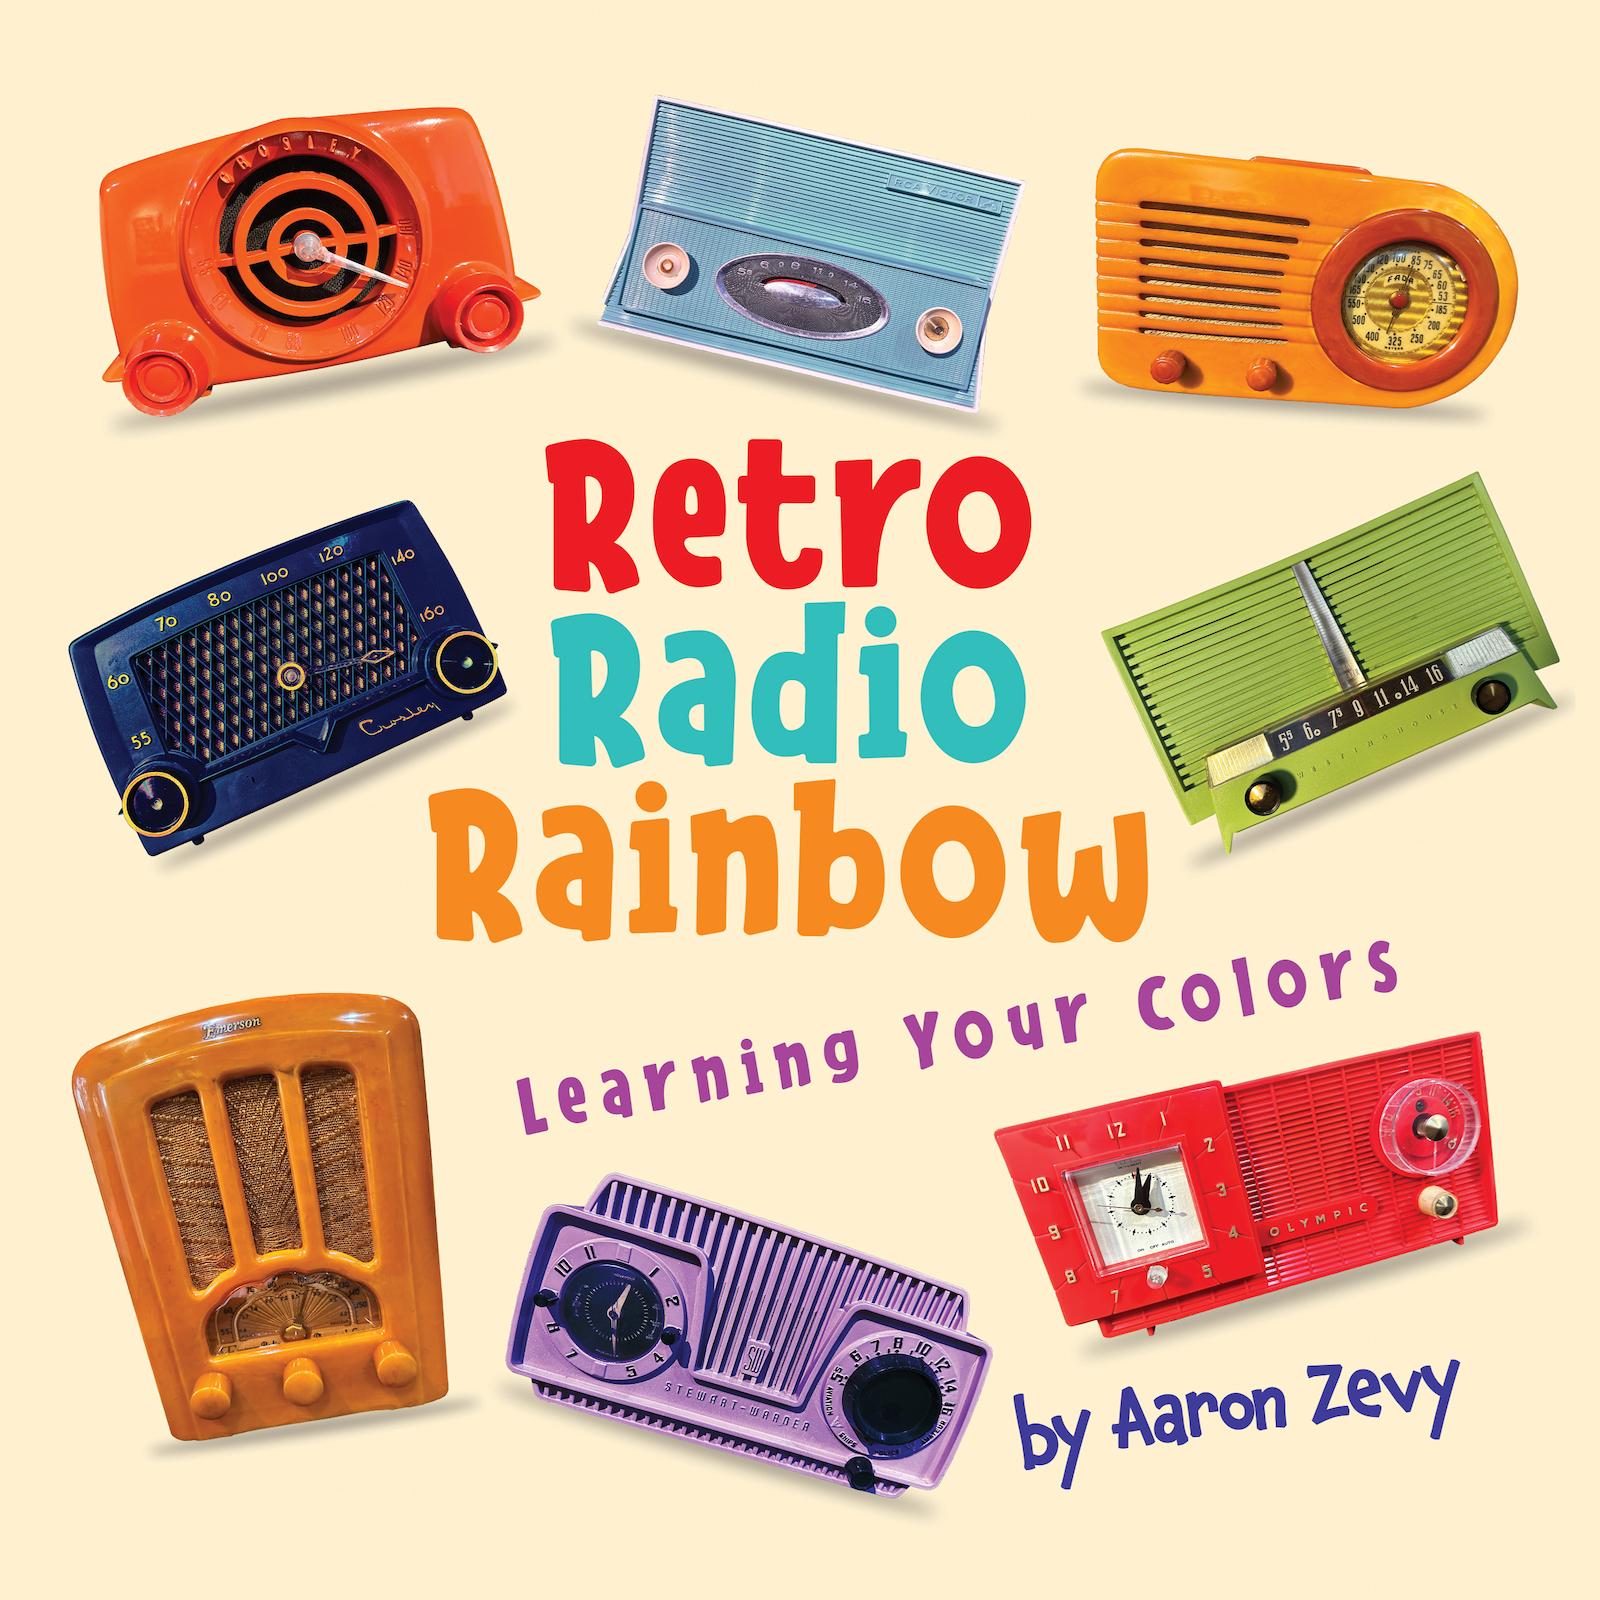 Retro Radio Rainbow: Learning Your Colors